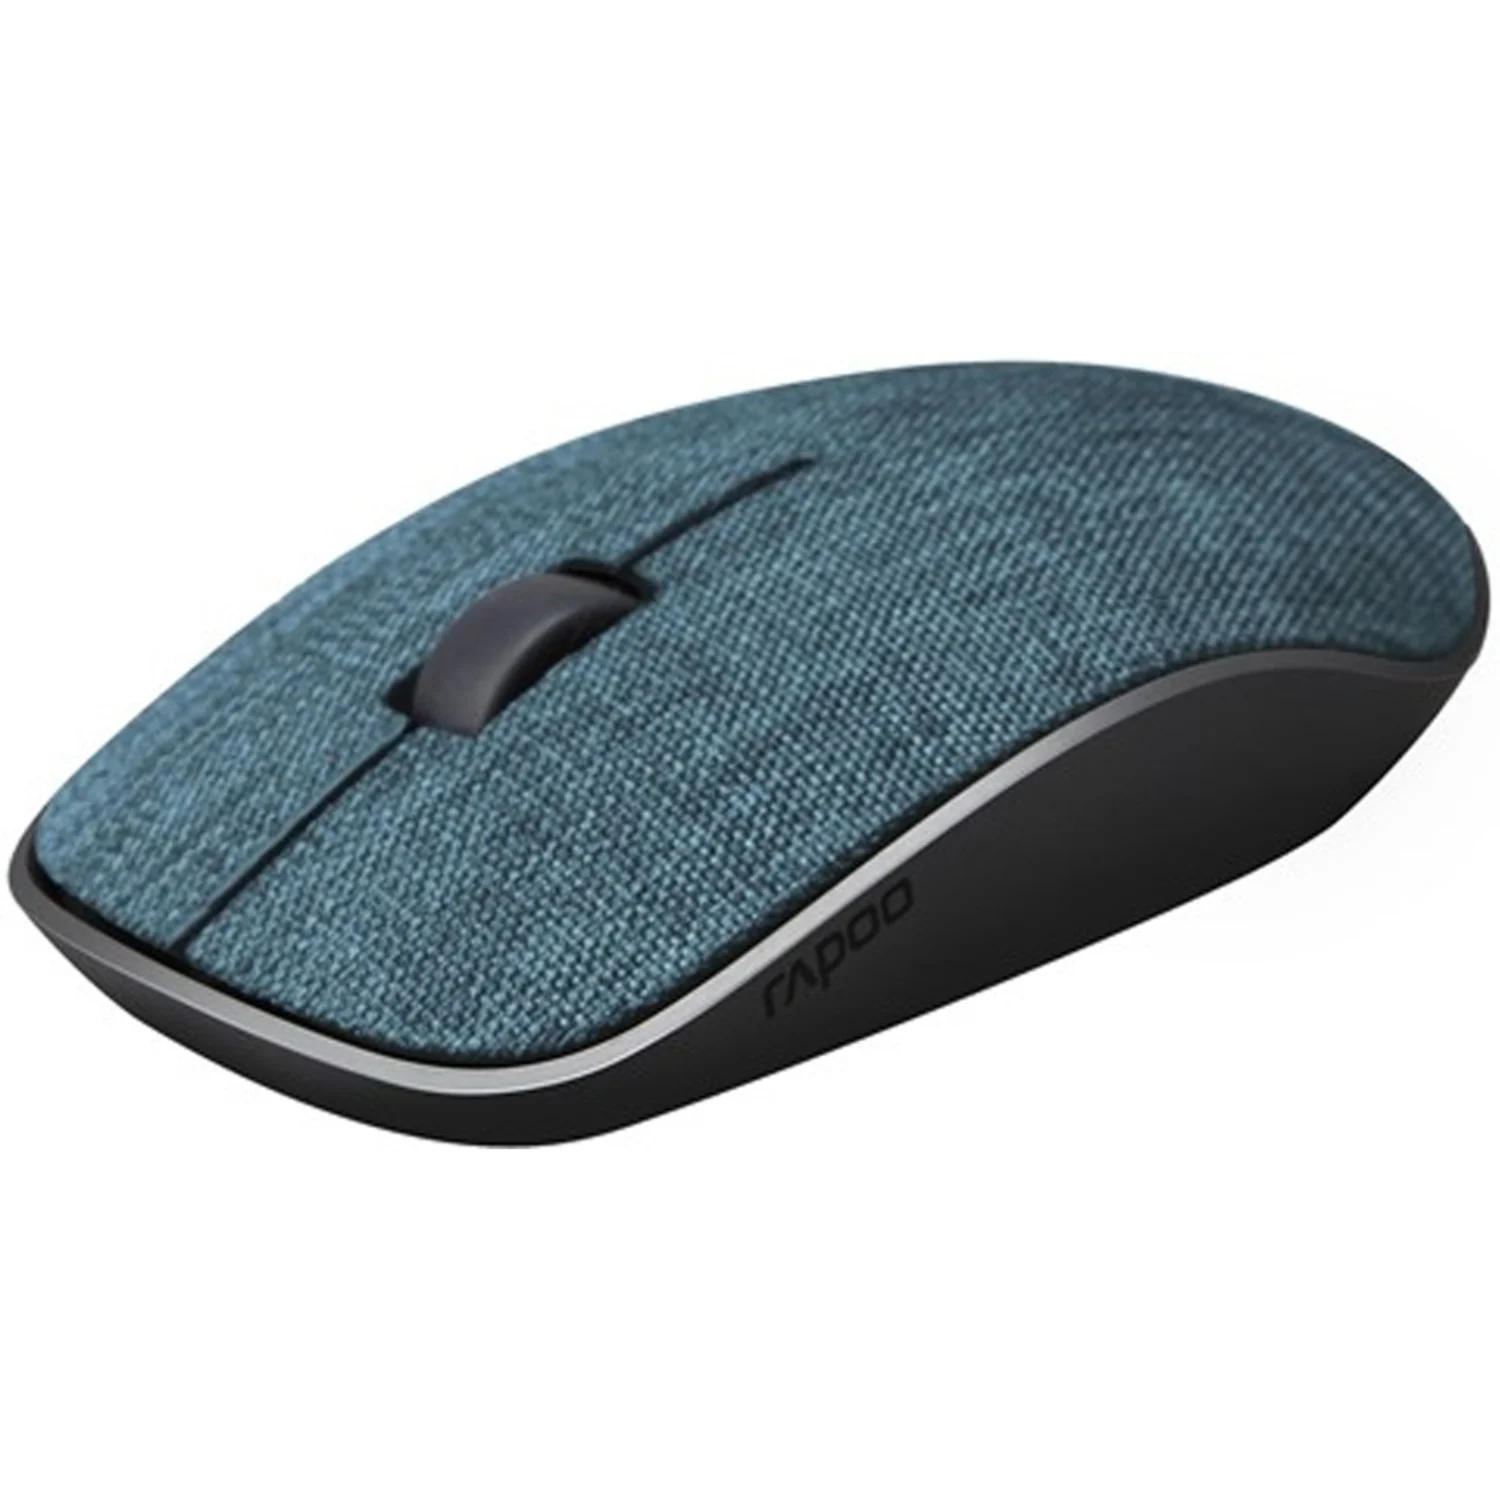 Mouse Rapoo 3510 Plus Wireless - Azul